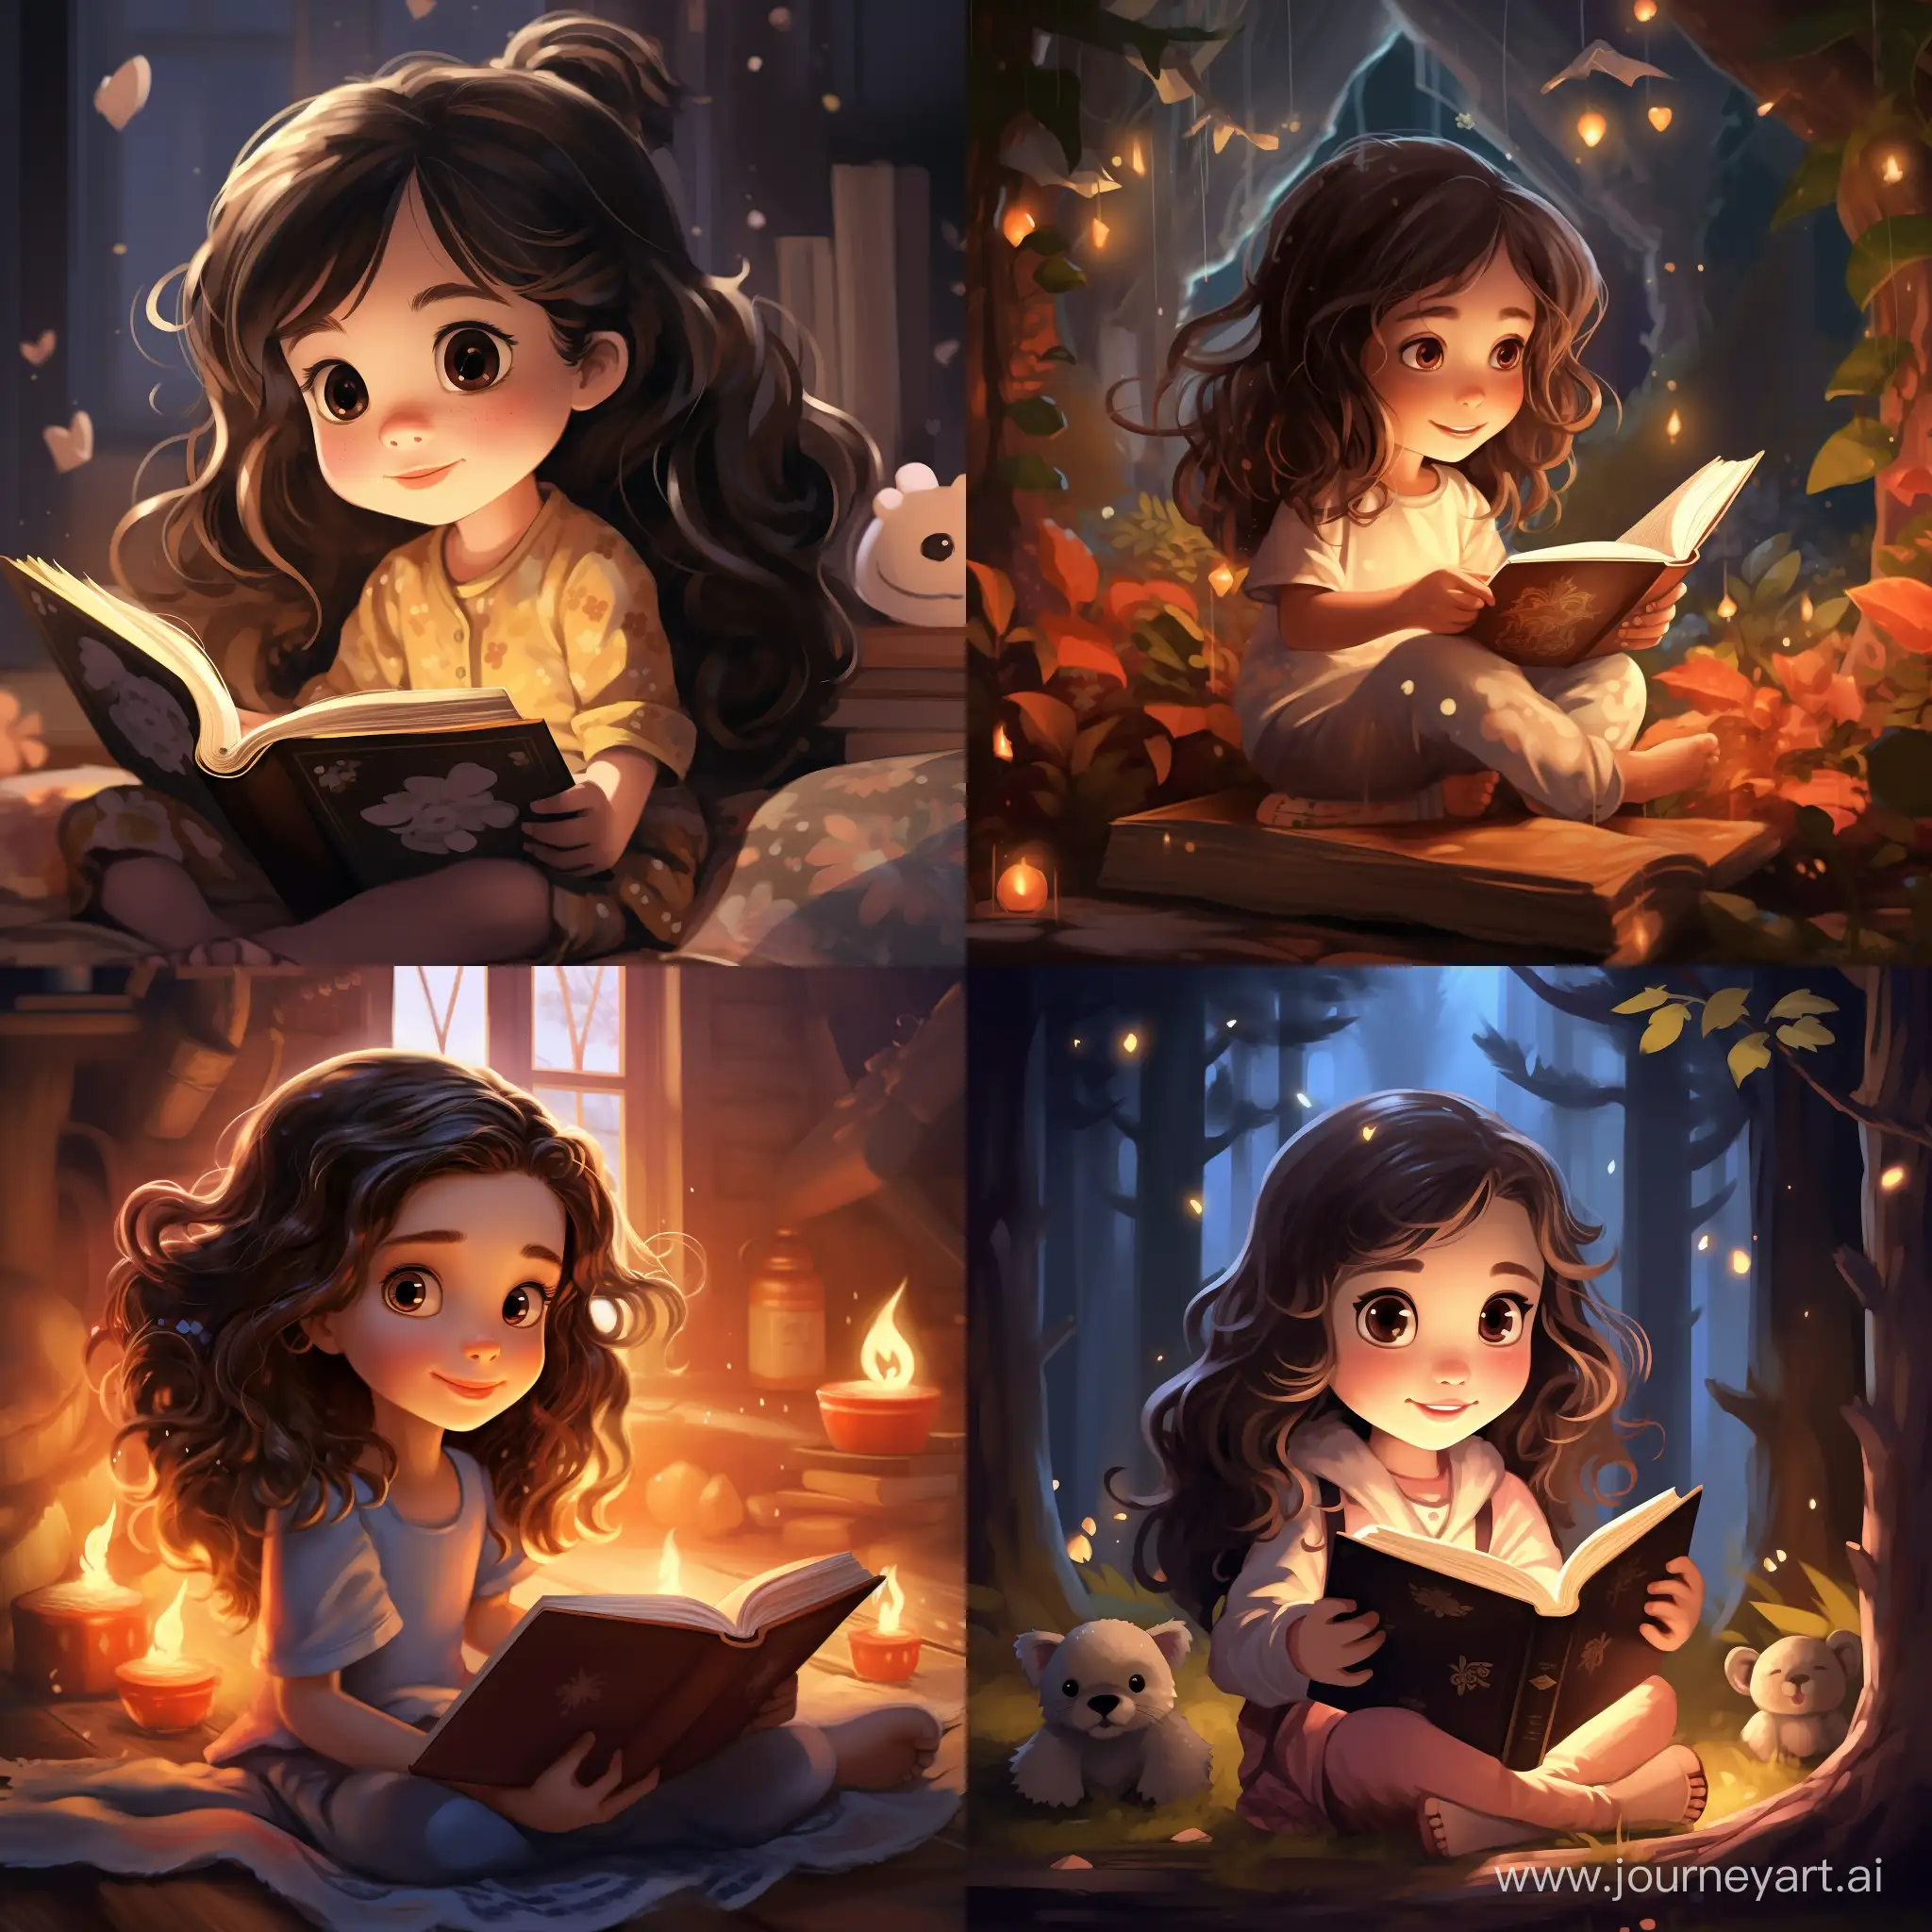  a little girl reading a magical book, cartoon style